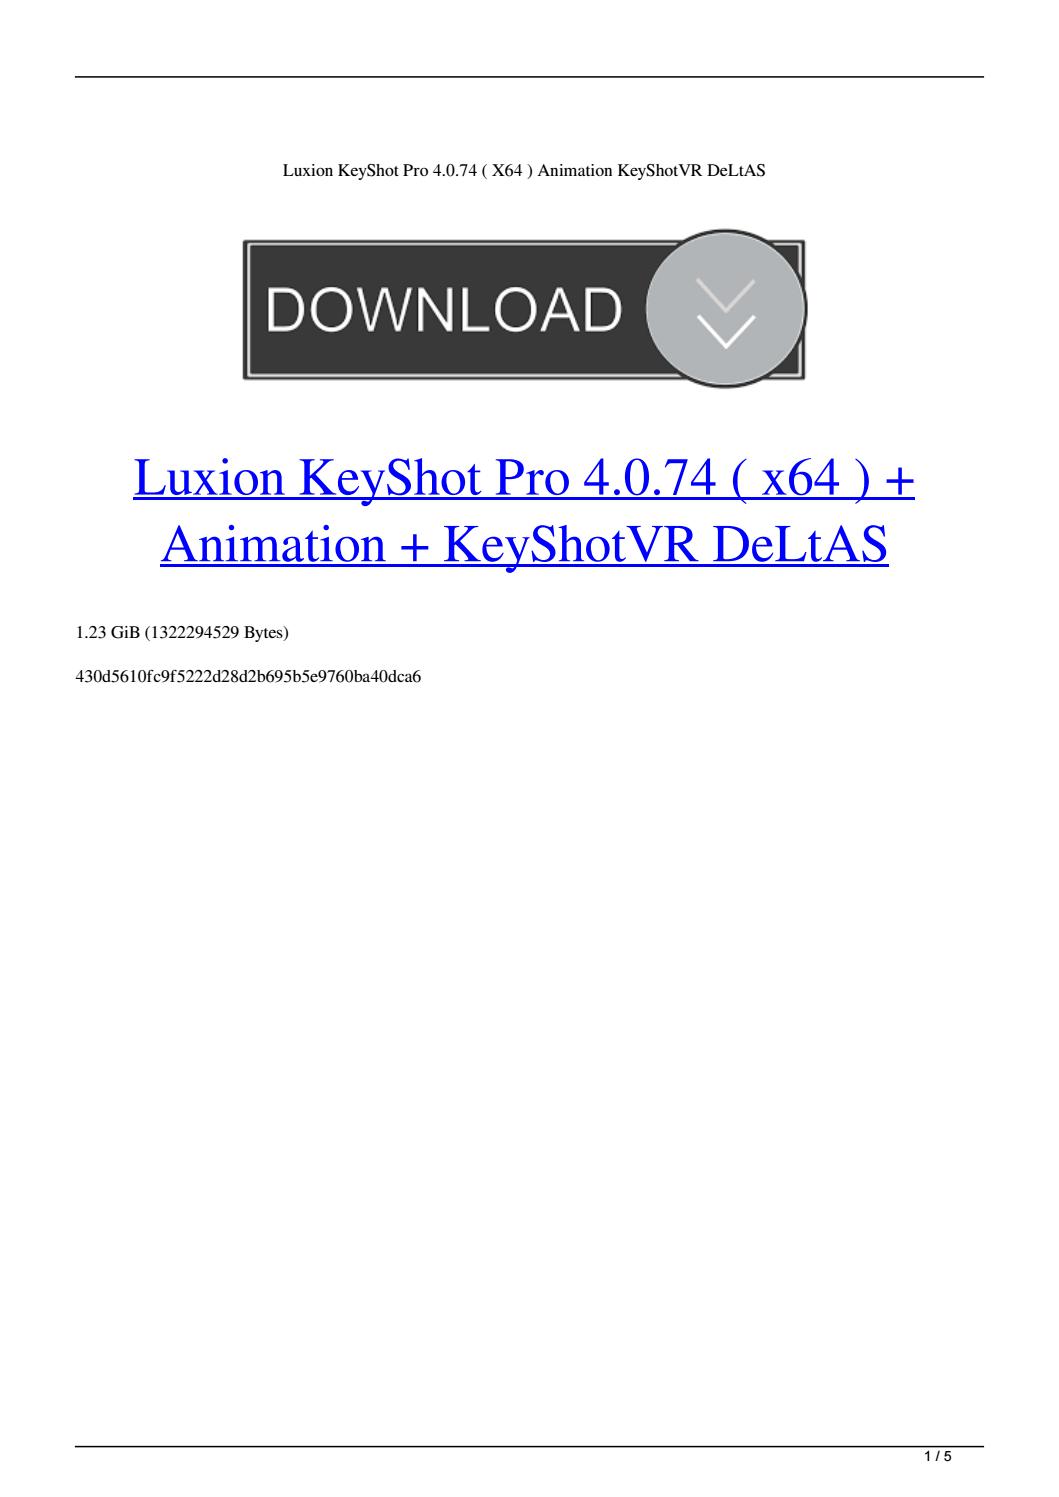 keyshot 3 pro animation crack torrent